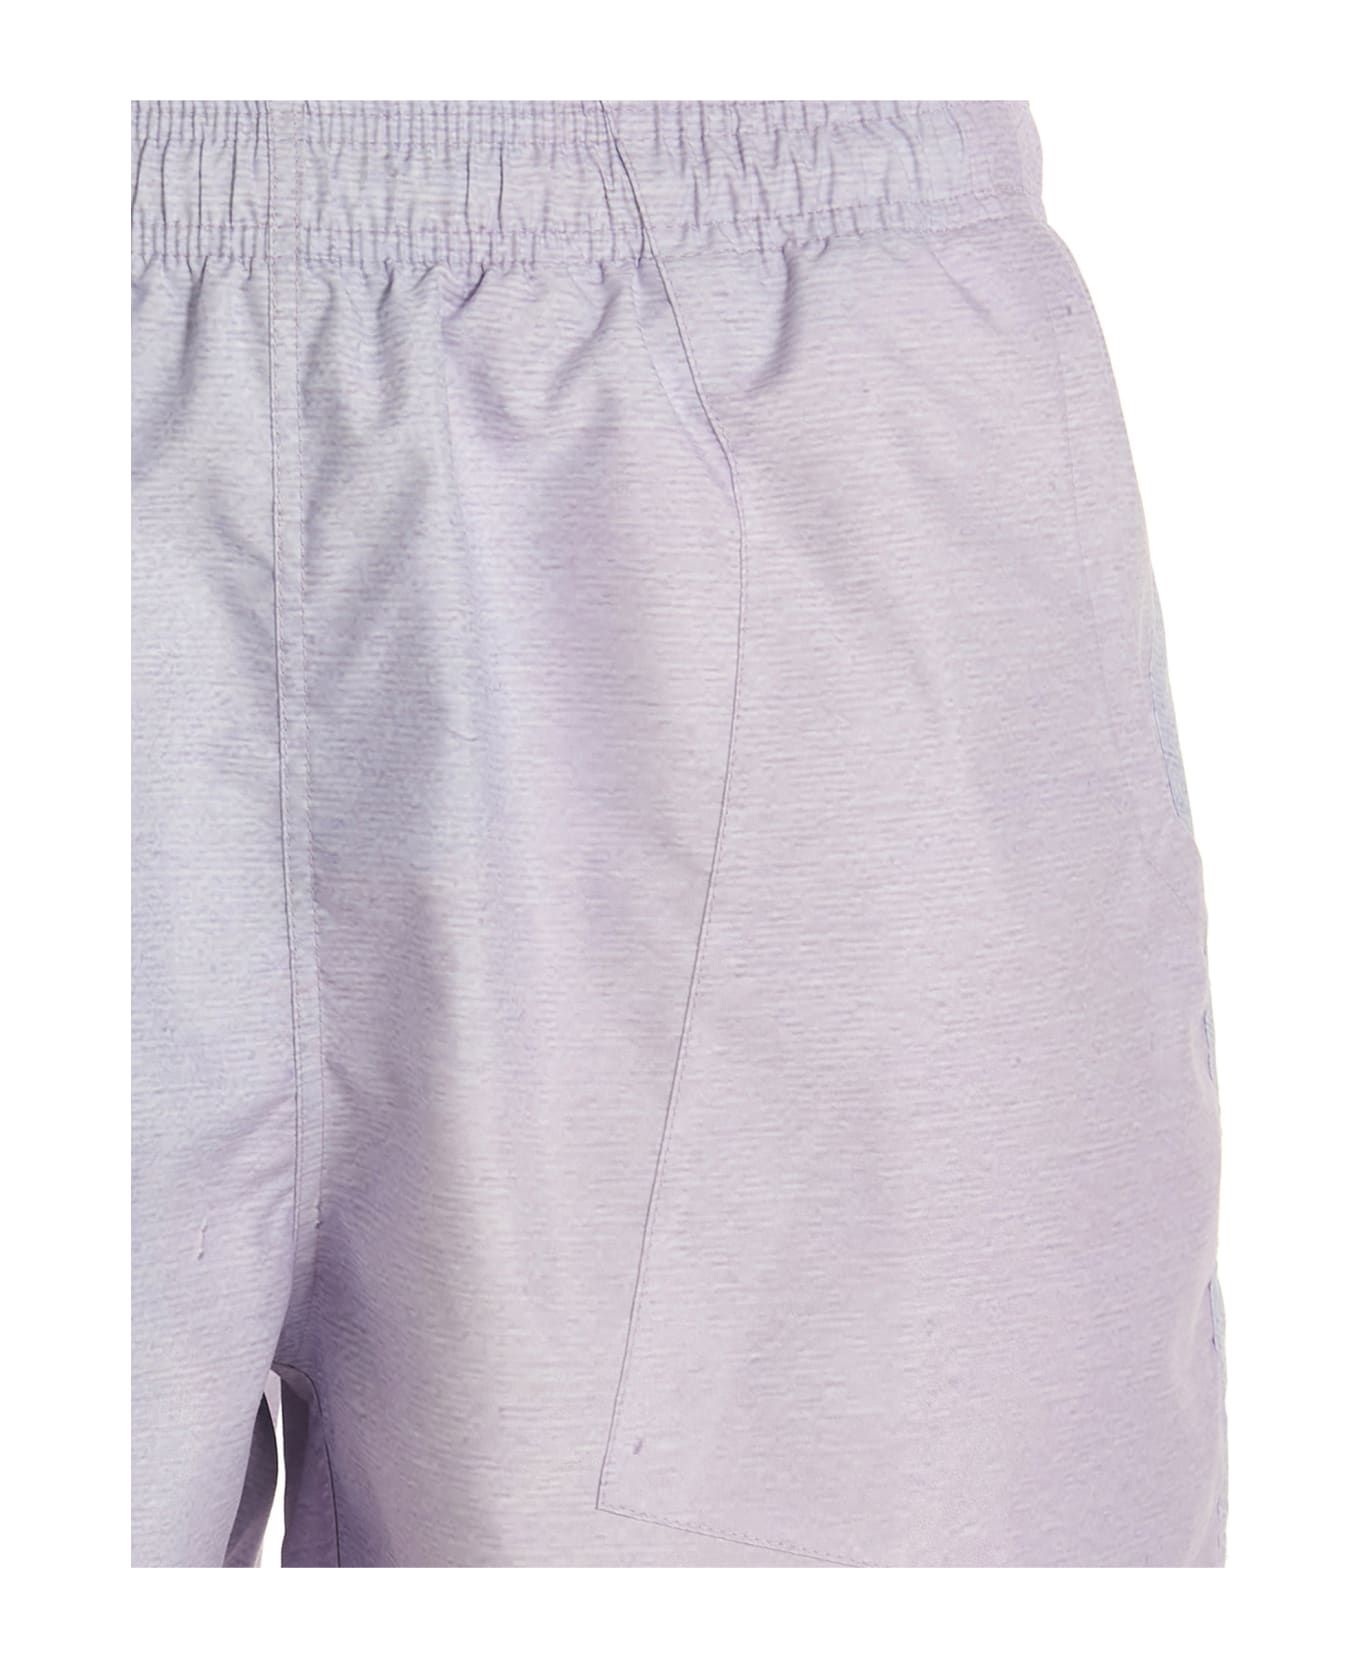 Objects Iv Life Printed Beach Shorts - Purple